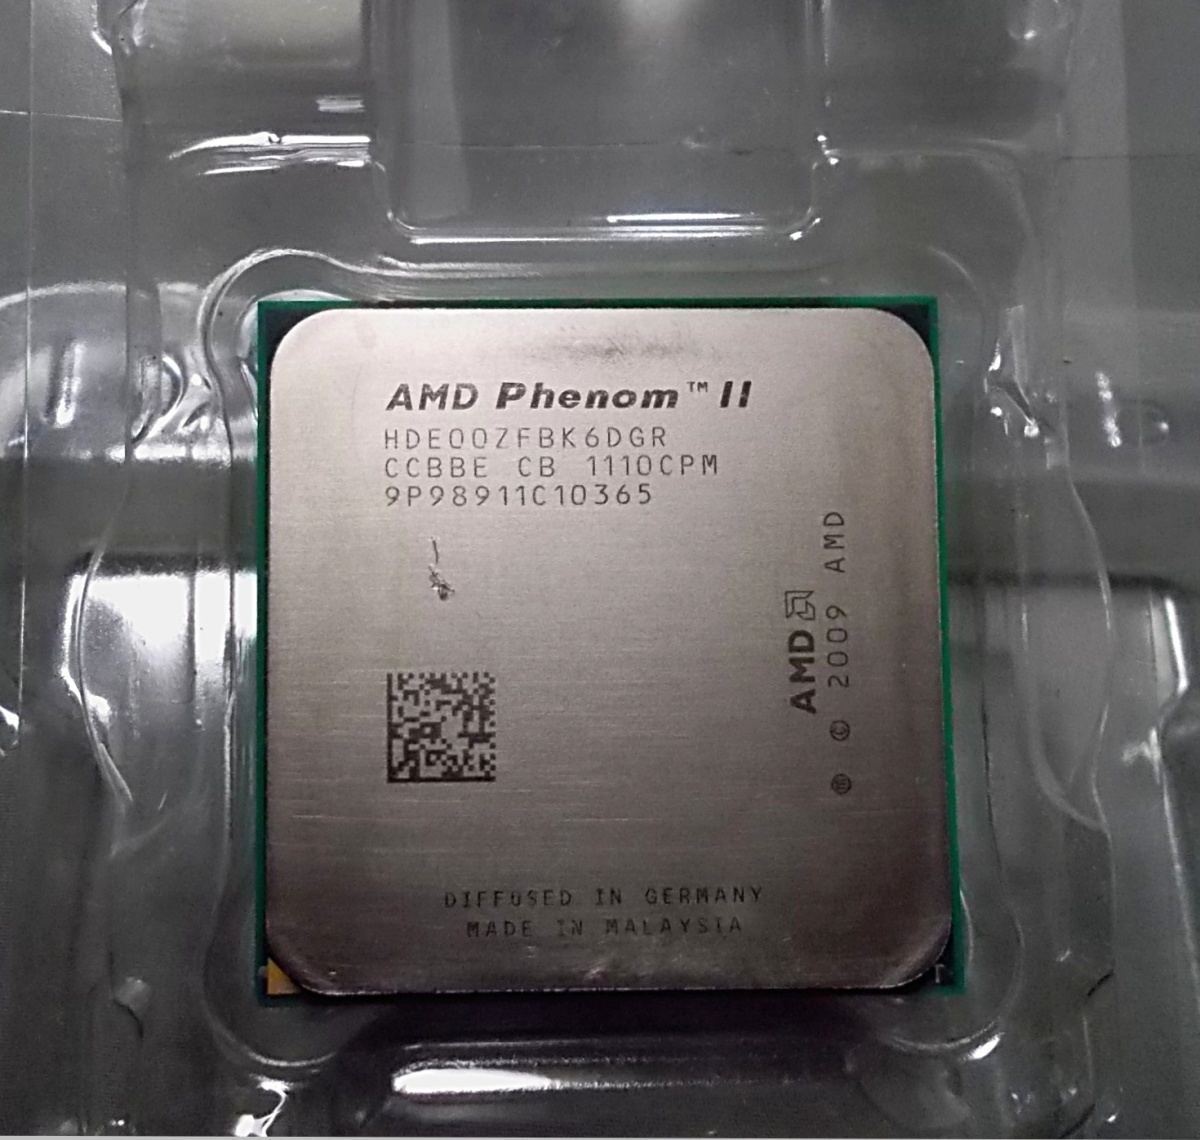 Amd phenom tm x6. AMD Phenom II x6 1100t Black Edition. Phenom II x6 1100. AMD Phenom II x6 1100t Black Edition процессор. Phenom II x6 1050t.